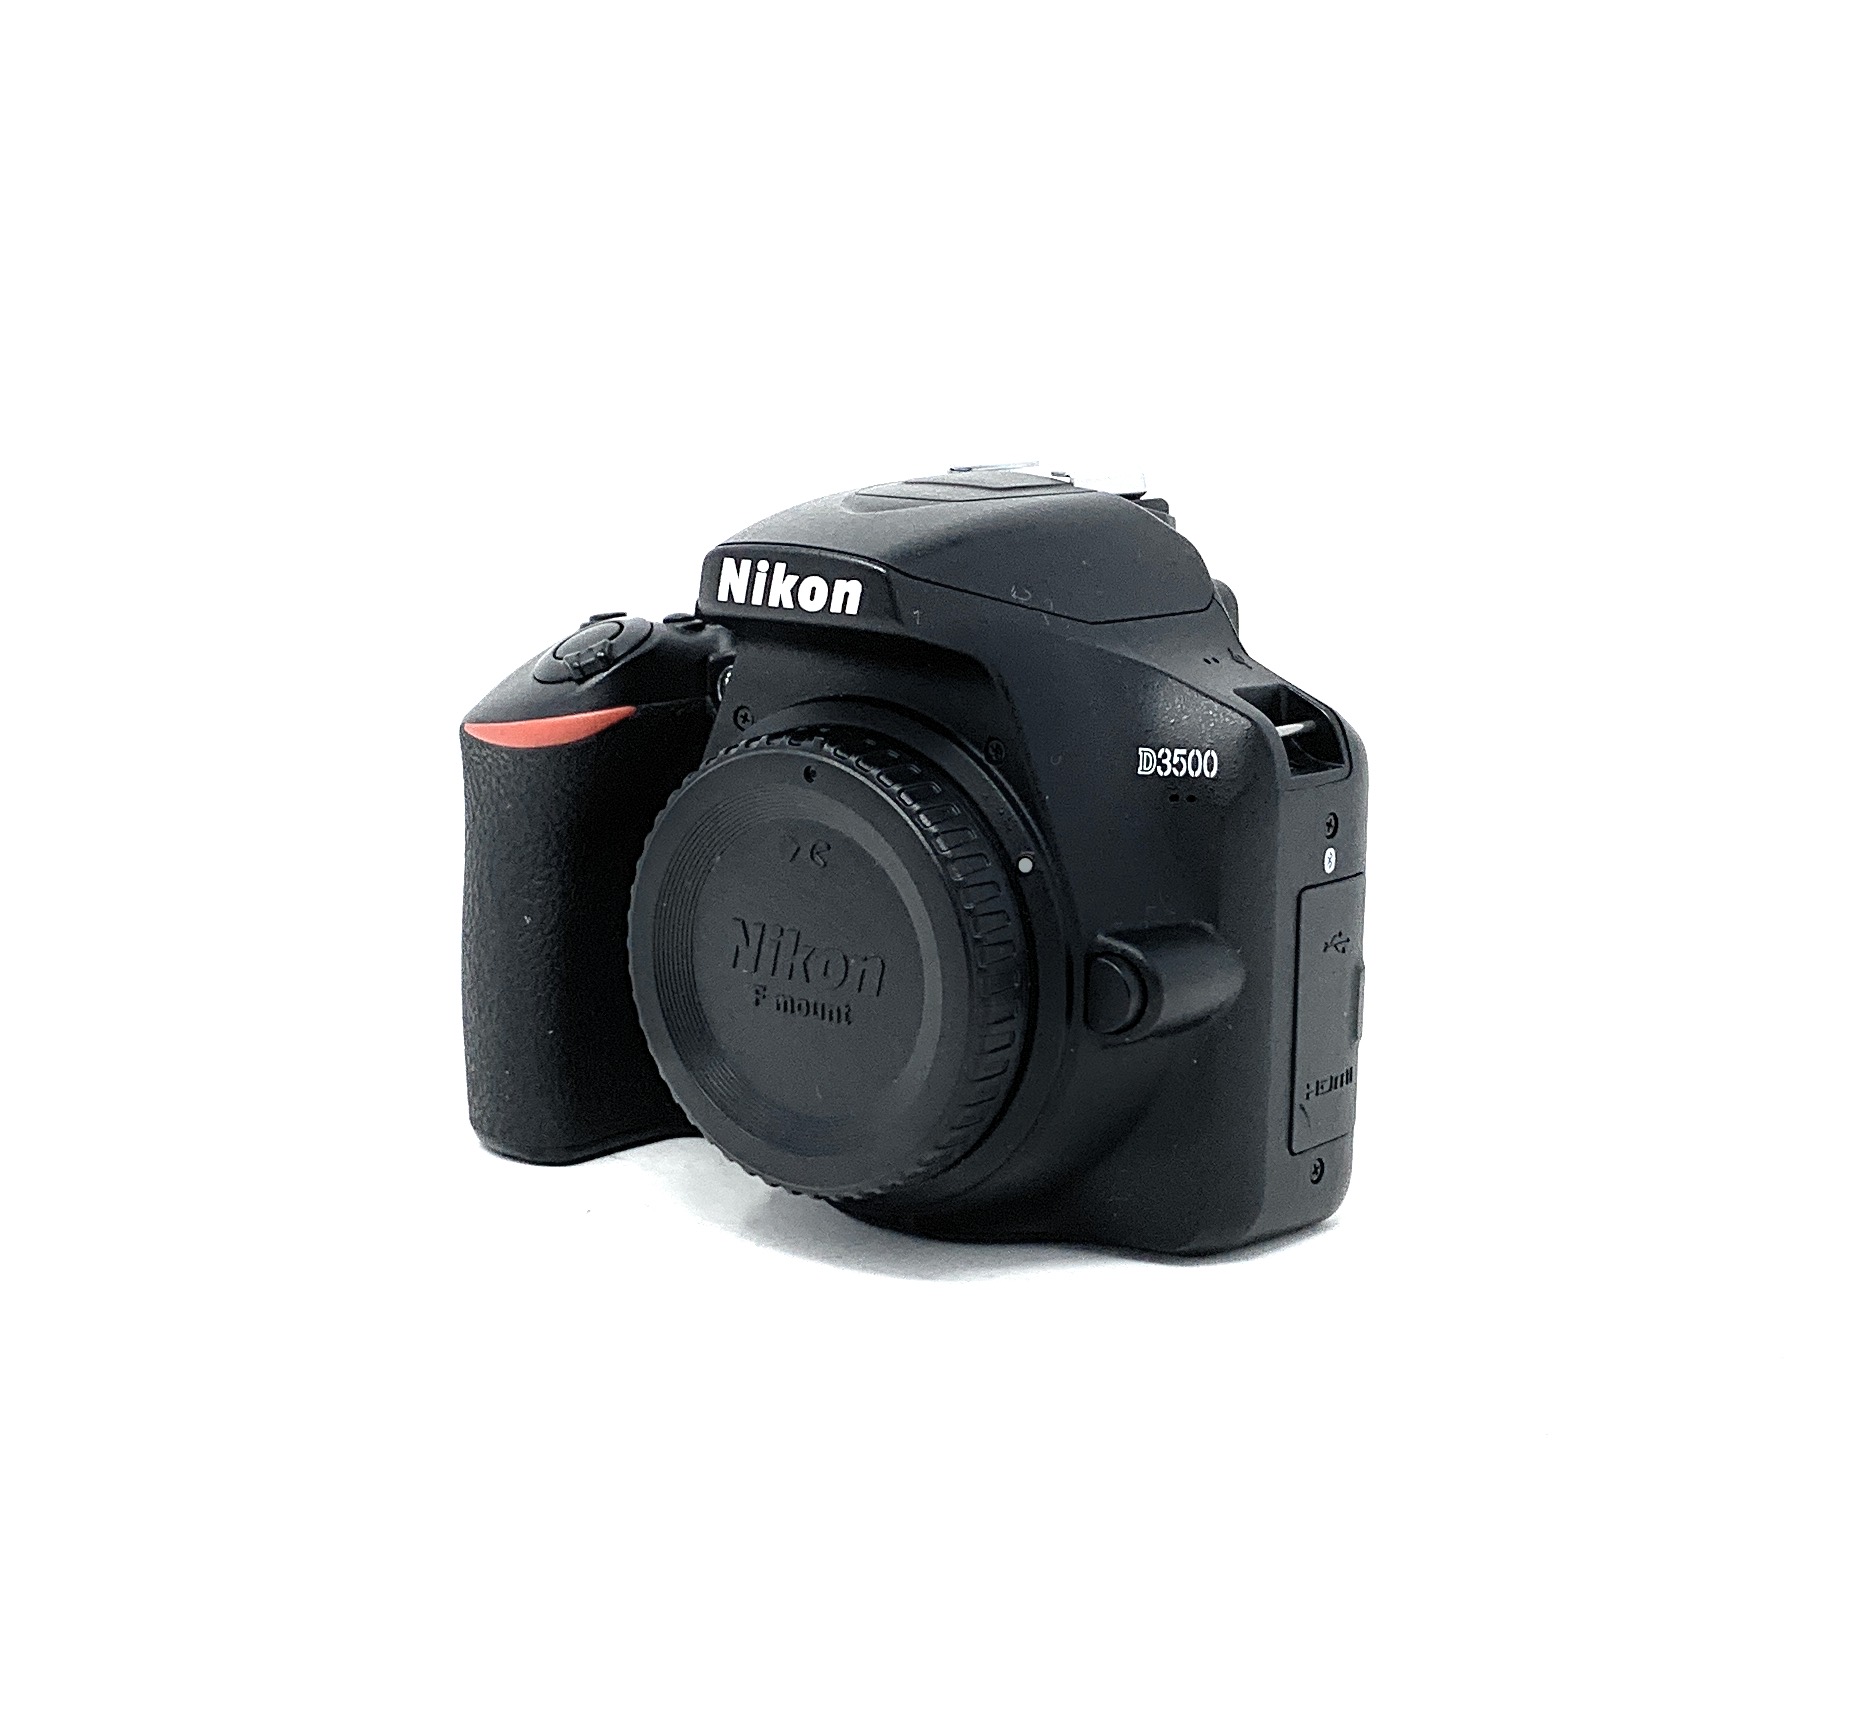 Nikon D3500 DSLR Camera (Body Only) USA